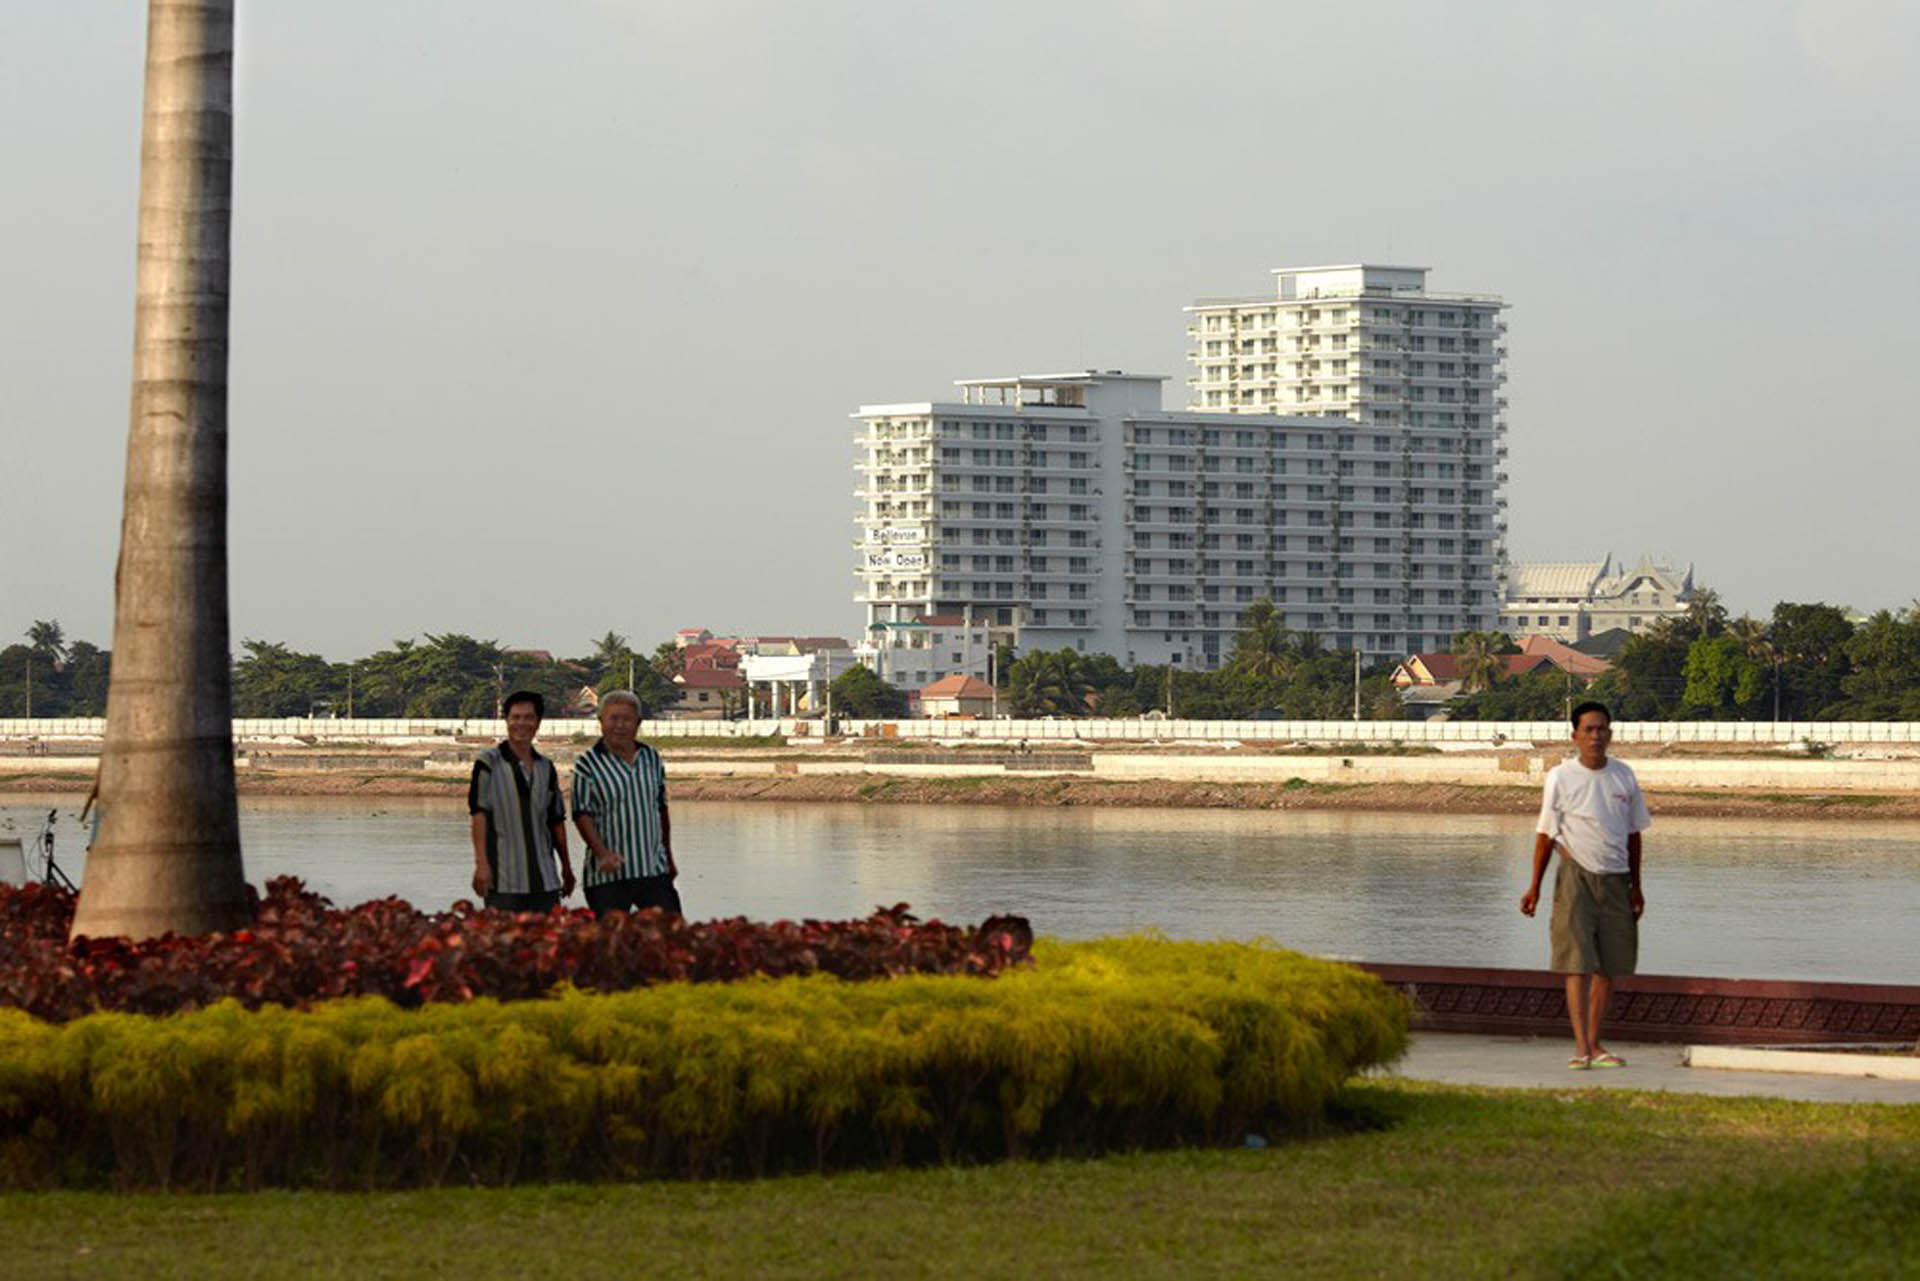 Bellevue Serviced Apartments, Phnom Penh, Cambodia